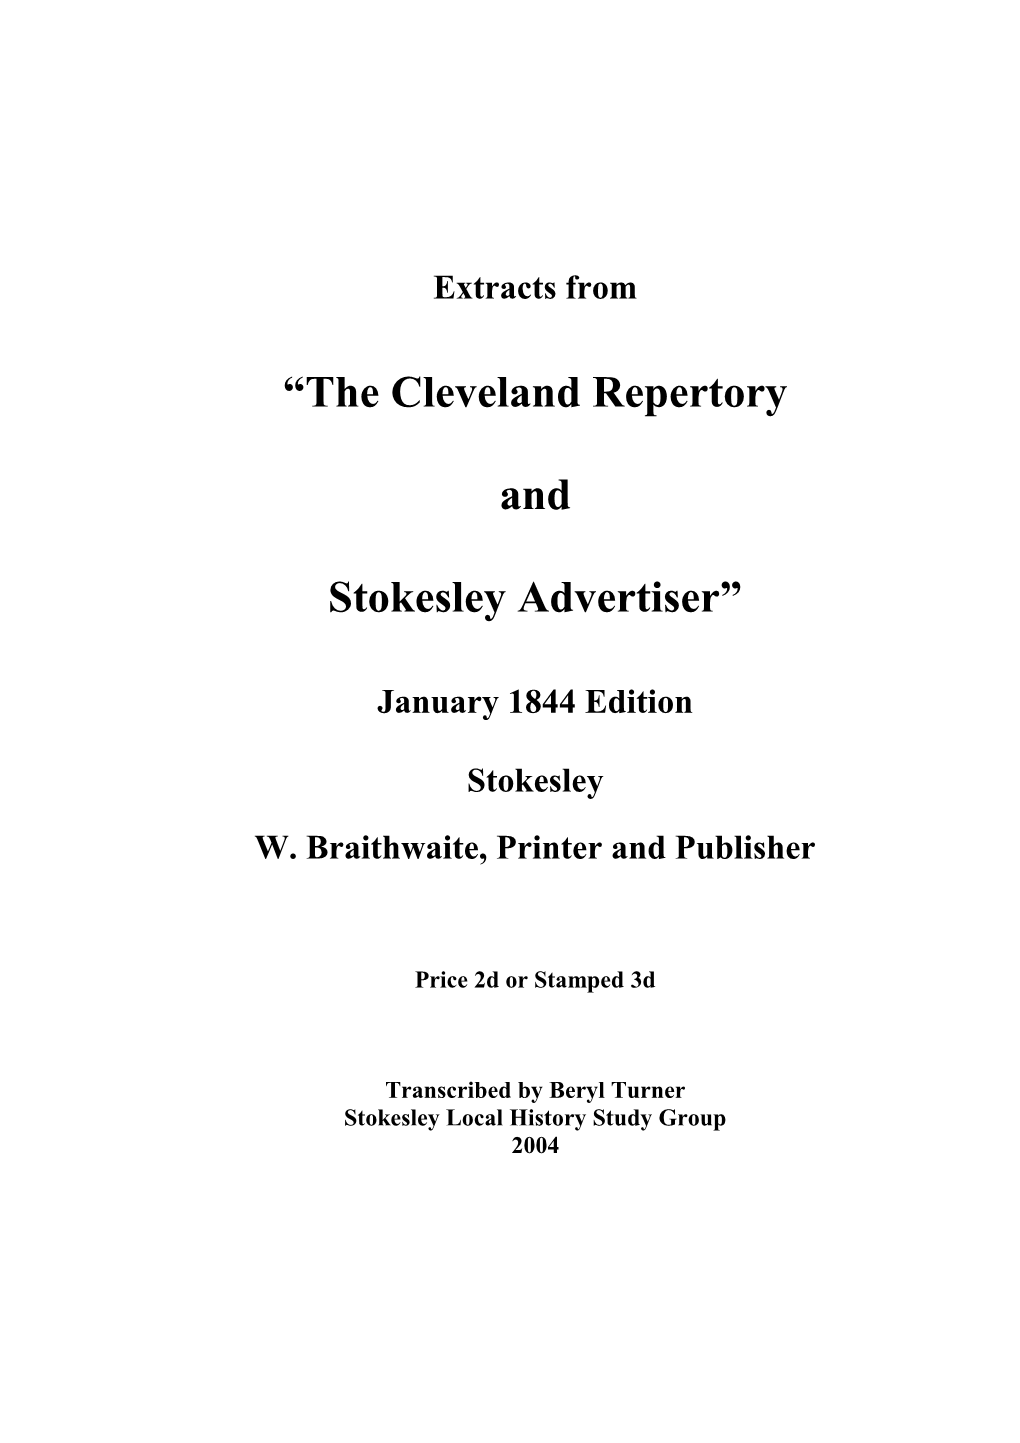 Cleveland Repertory & Stokesley Advertiser Jan 1844